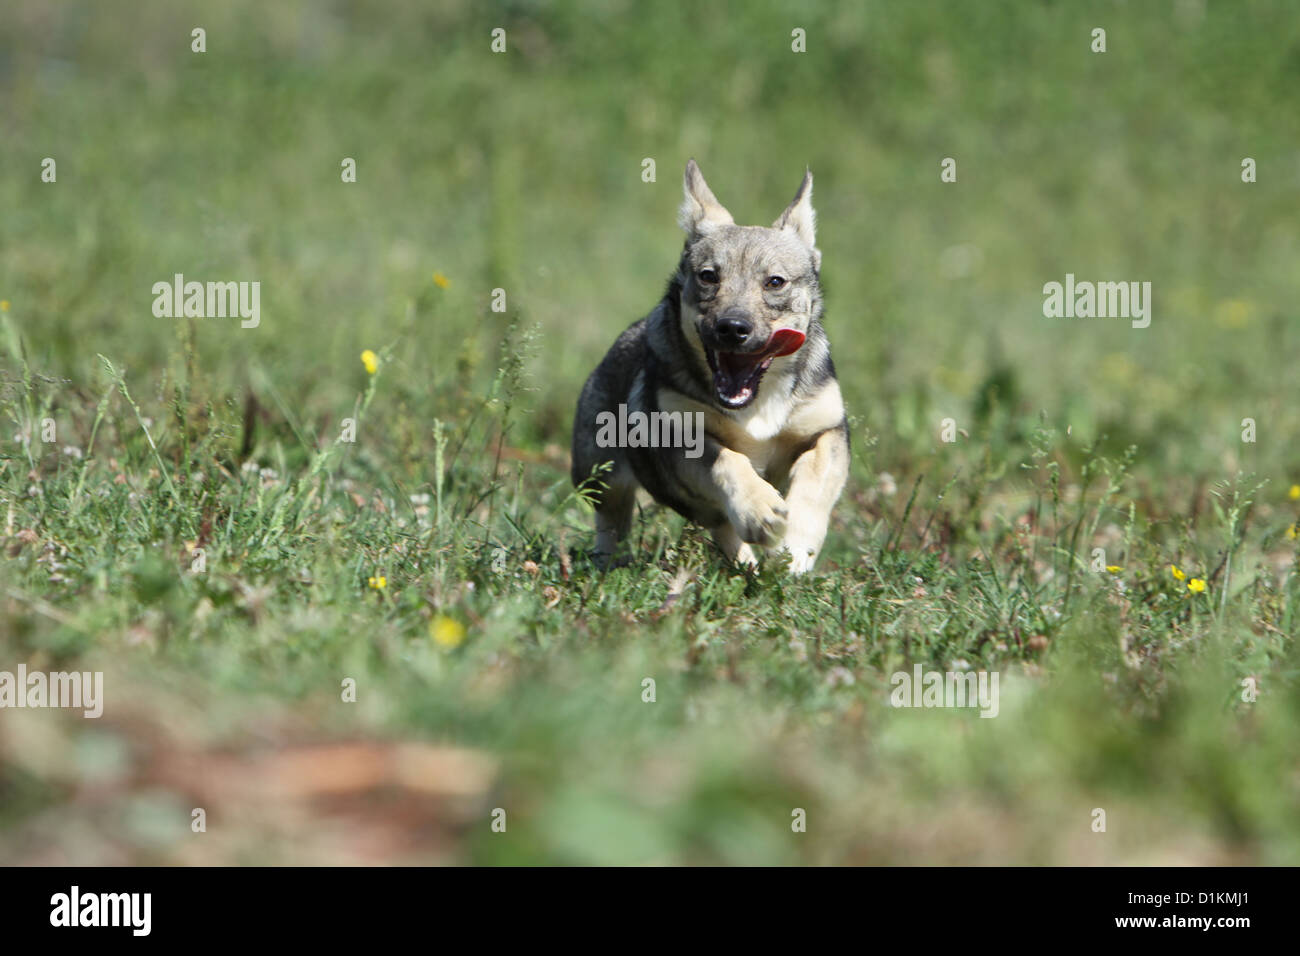 Dog Swedish Vallhund vastgotaspets puppy running Stock Photo - Alamy